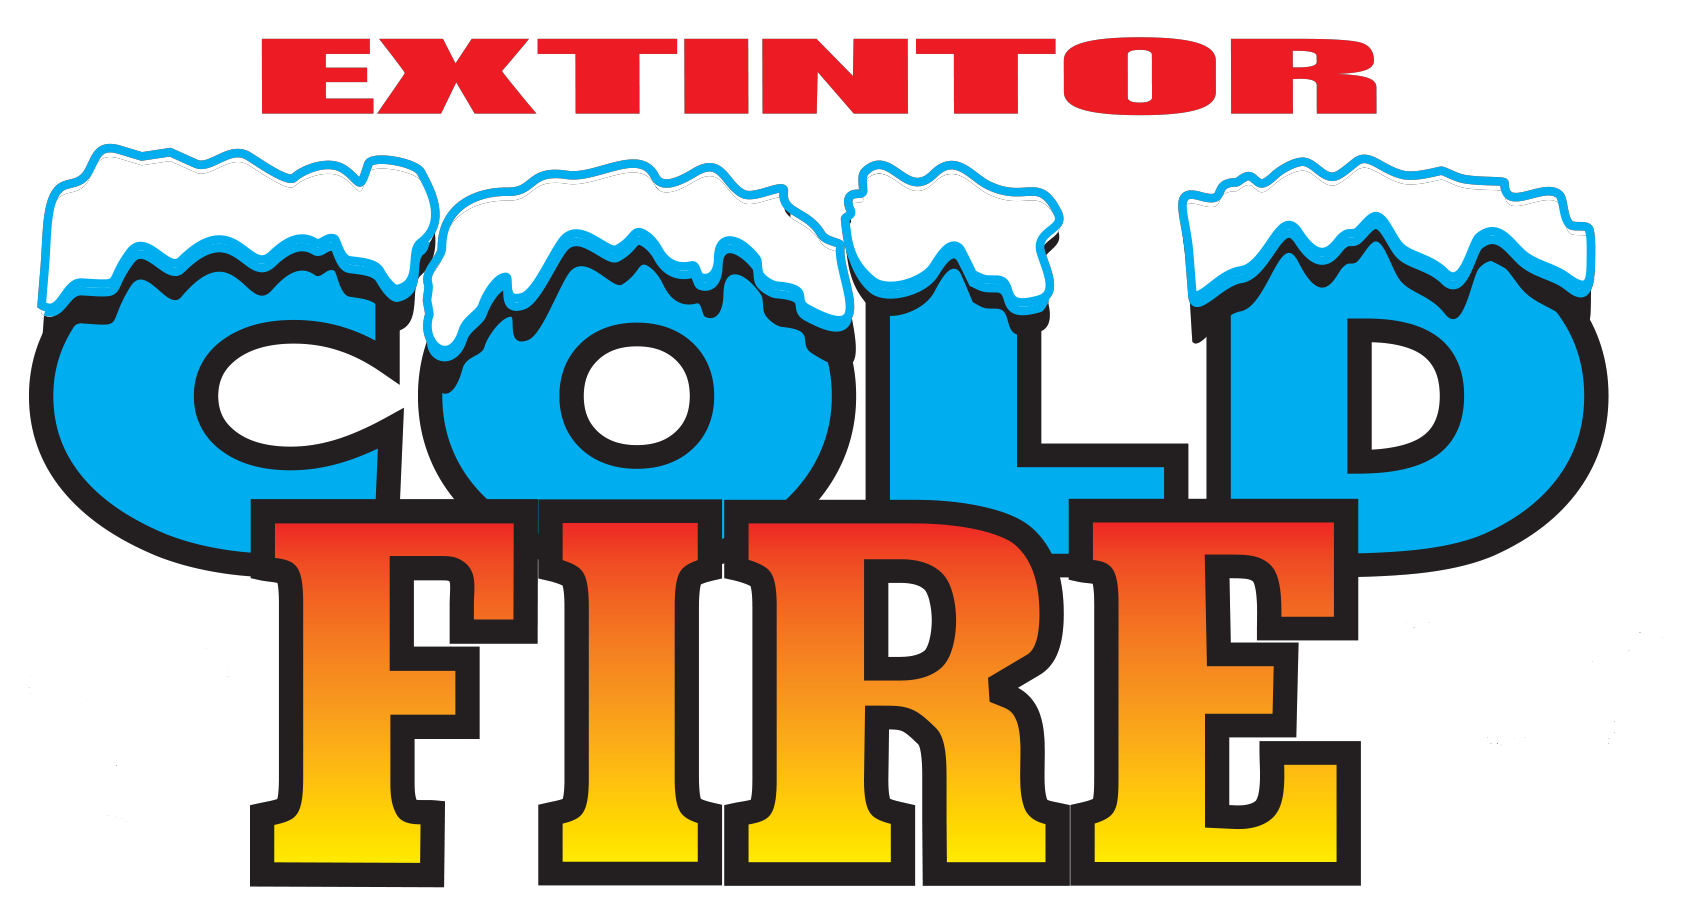 Cold Fire logo